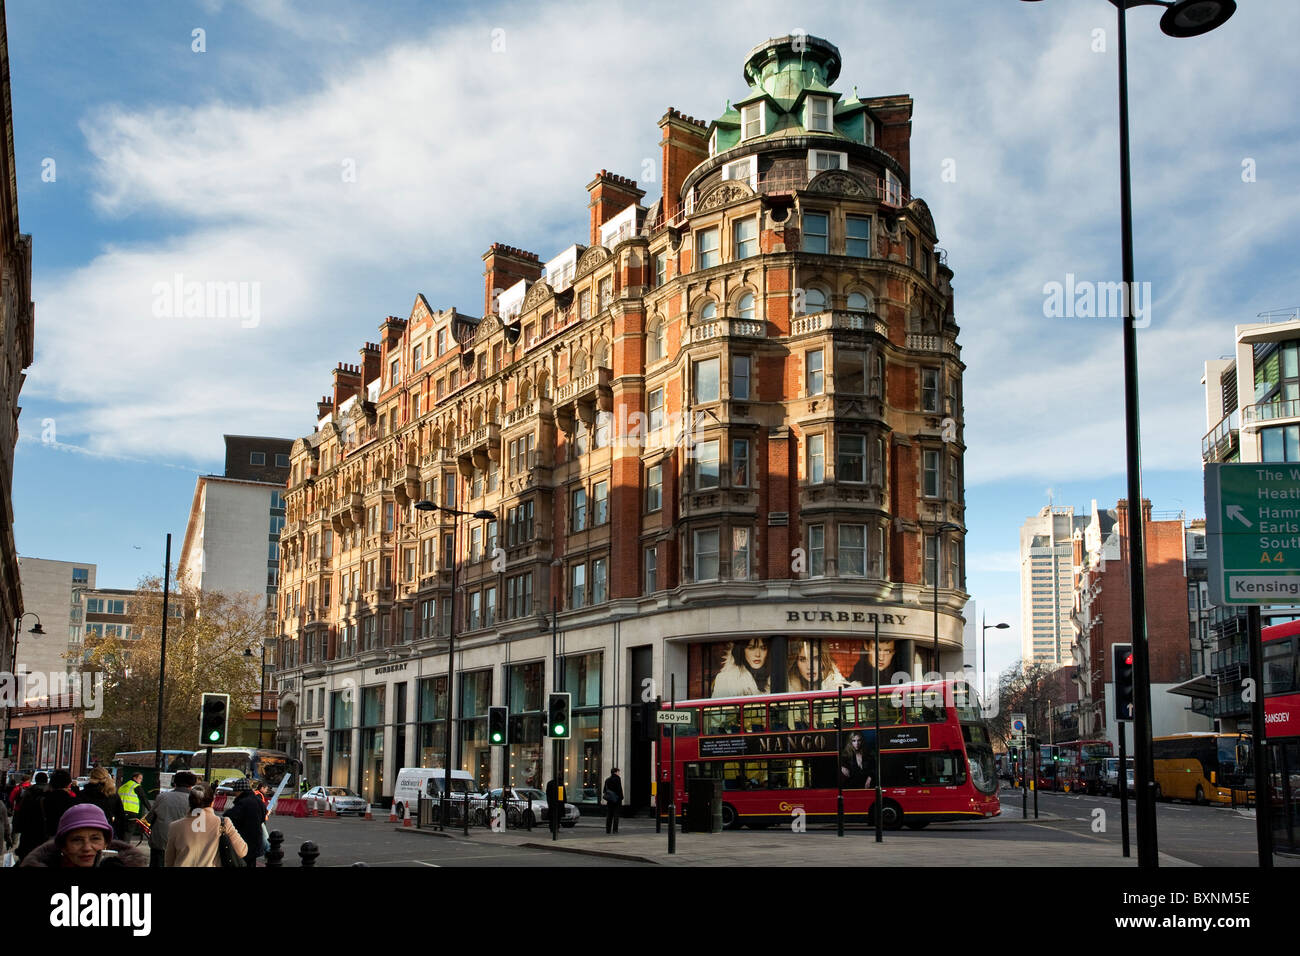 Burberry store, Knightsbridge, London, Uk Stock Photo - Alamy